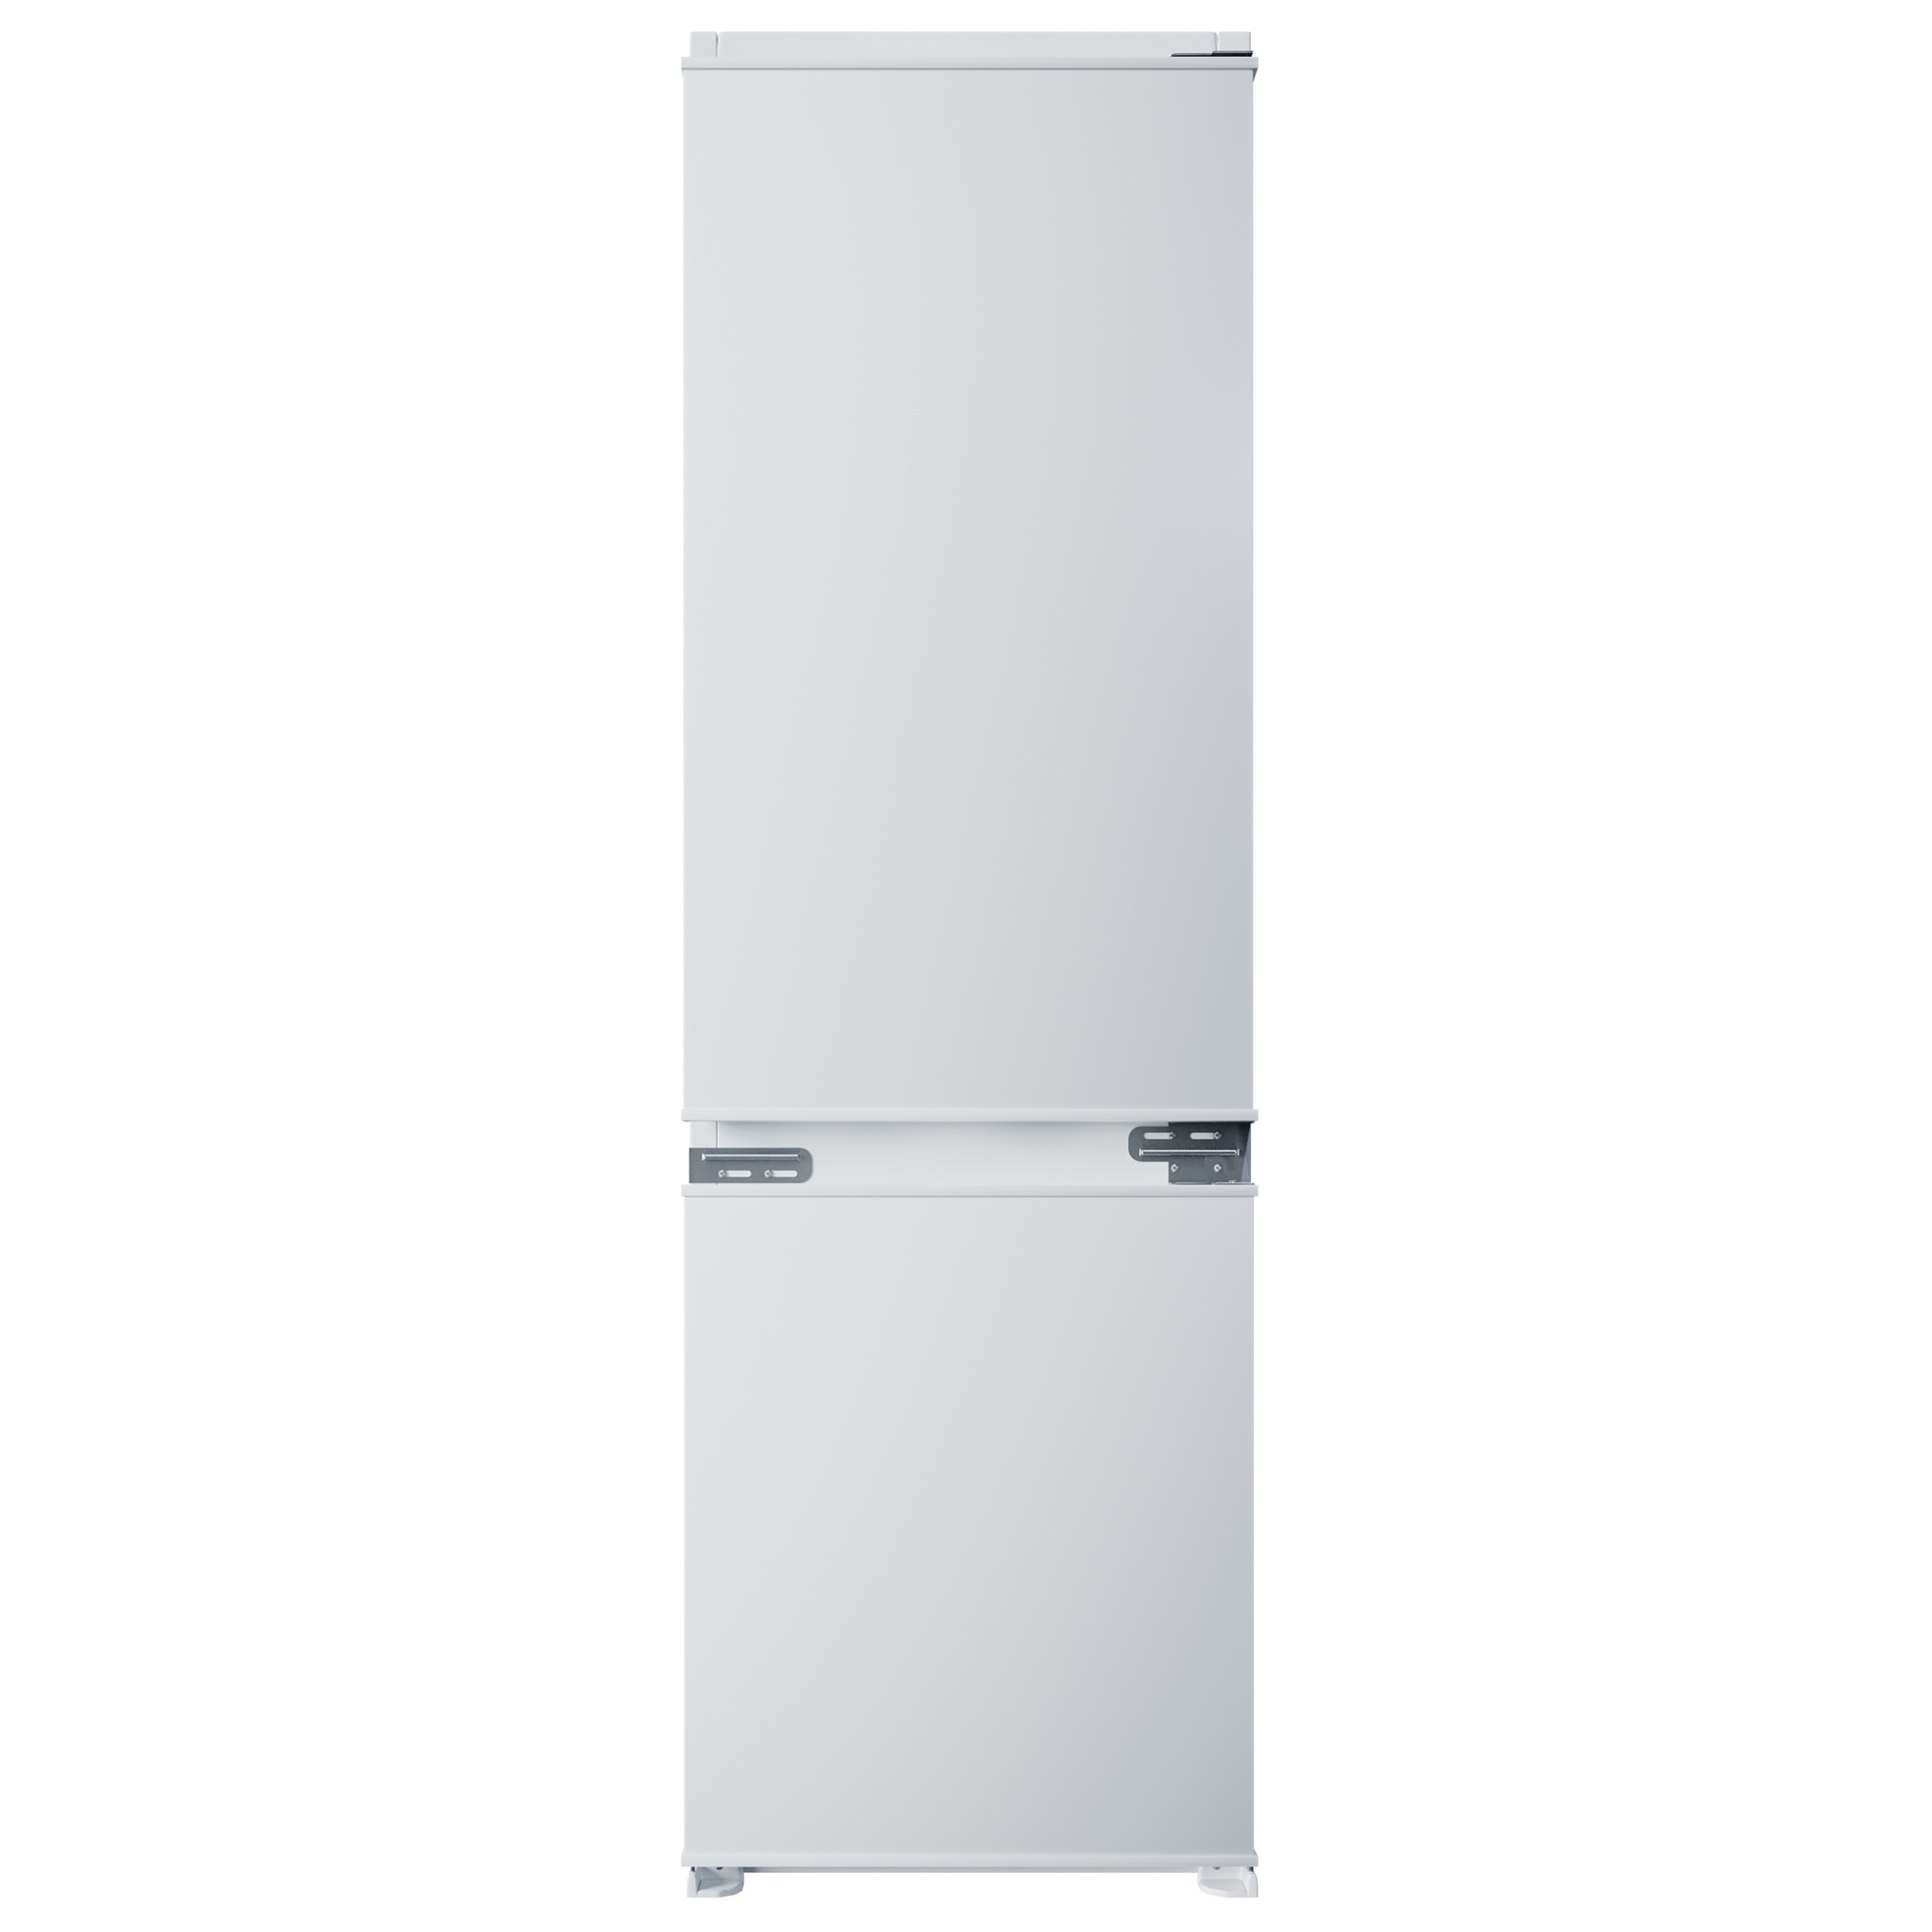 Встраиваемый холодильник Krona BALFRIN KRFR 101 белый встраиваемый двухкамерный холодильник krona bristen fnf